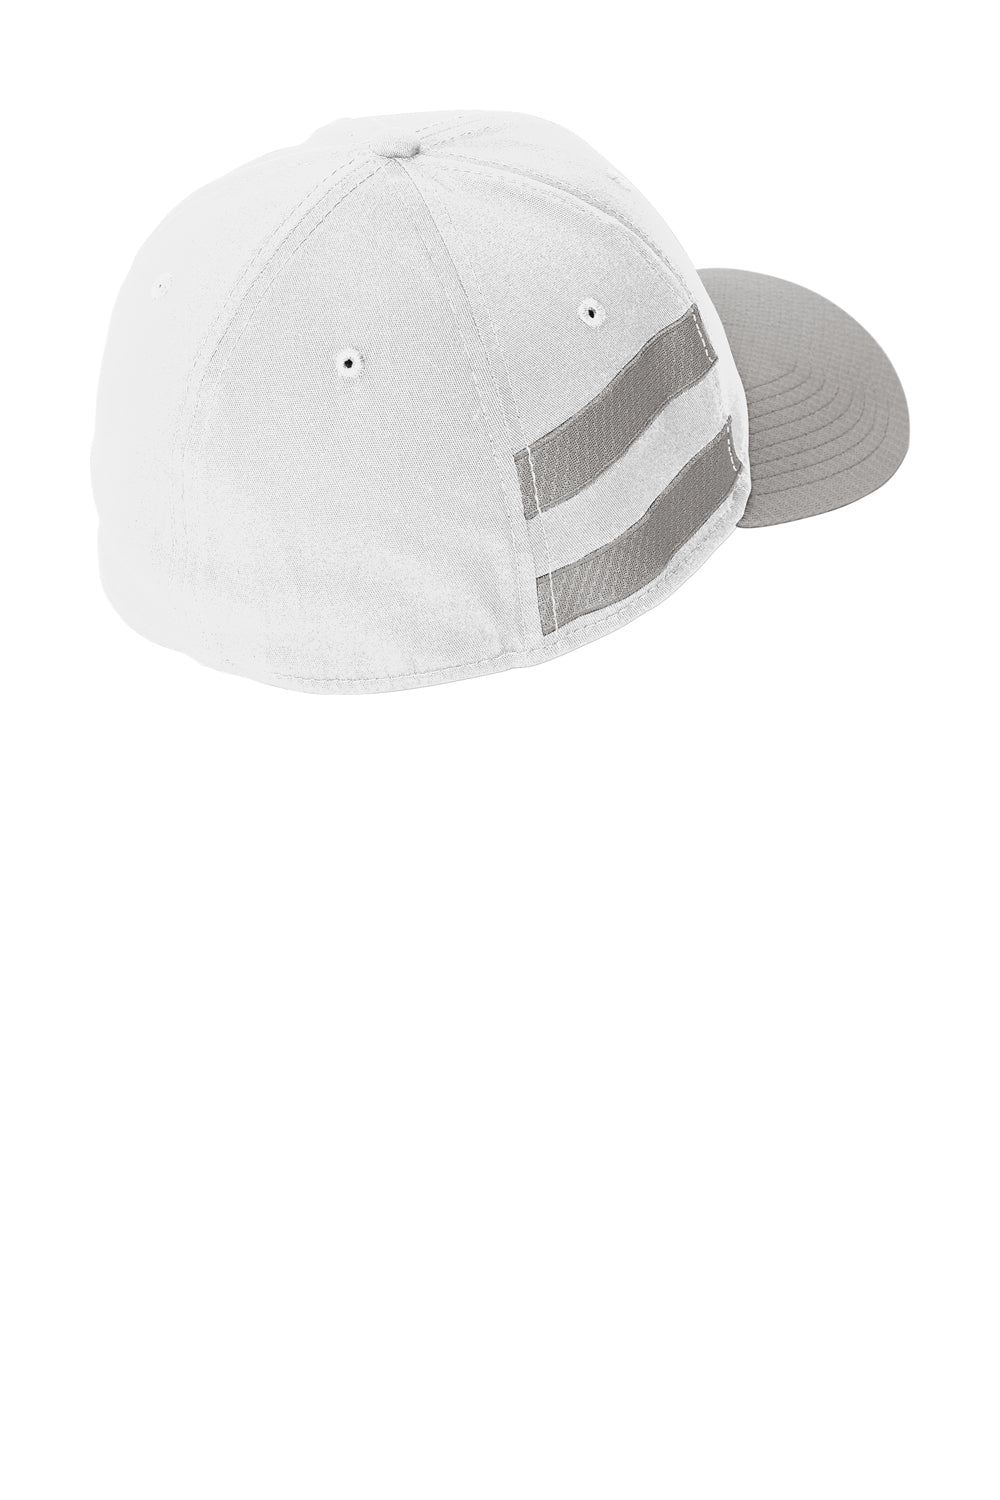 New Era NE1122 Striped Stretch Fit Hat White/Grey Side